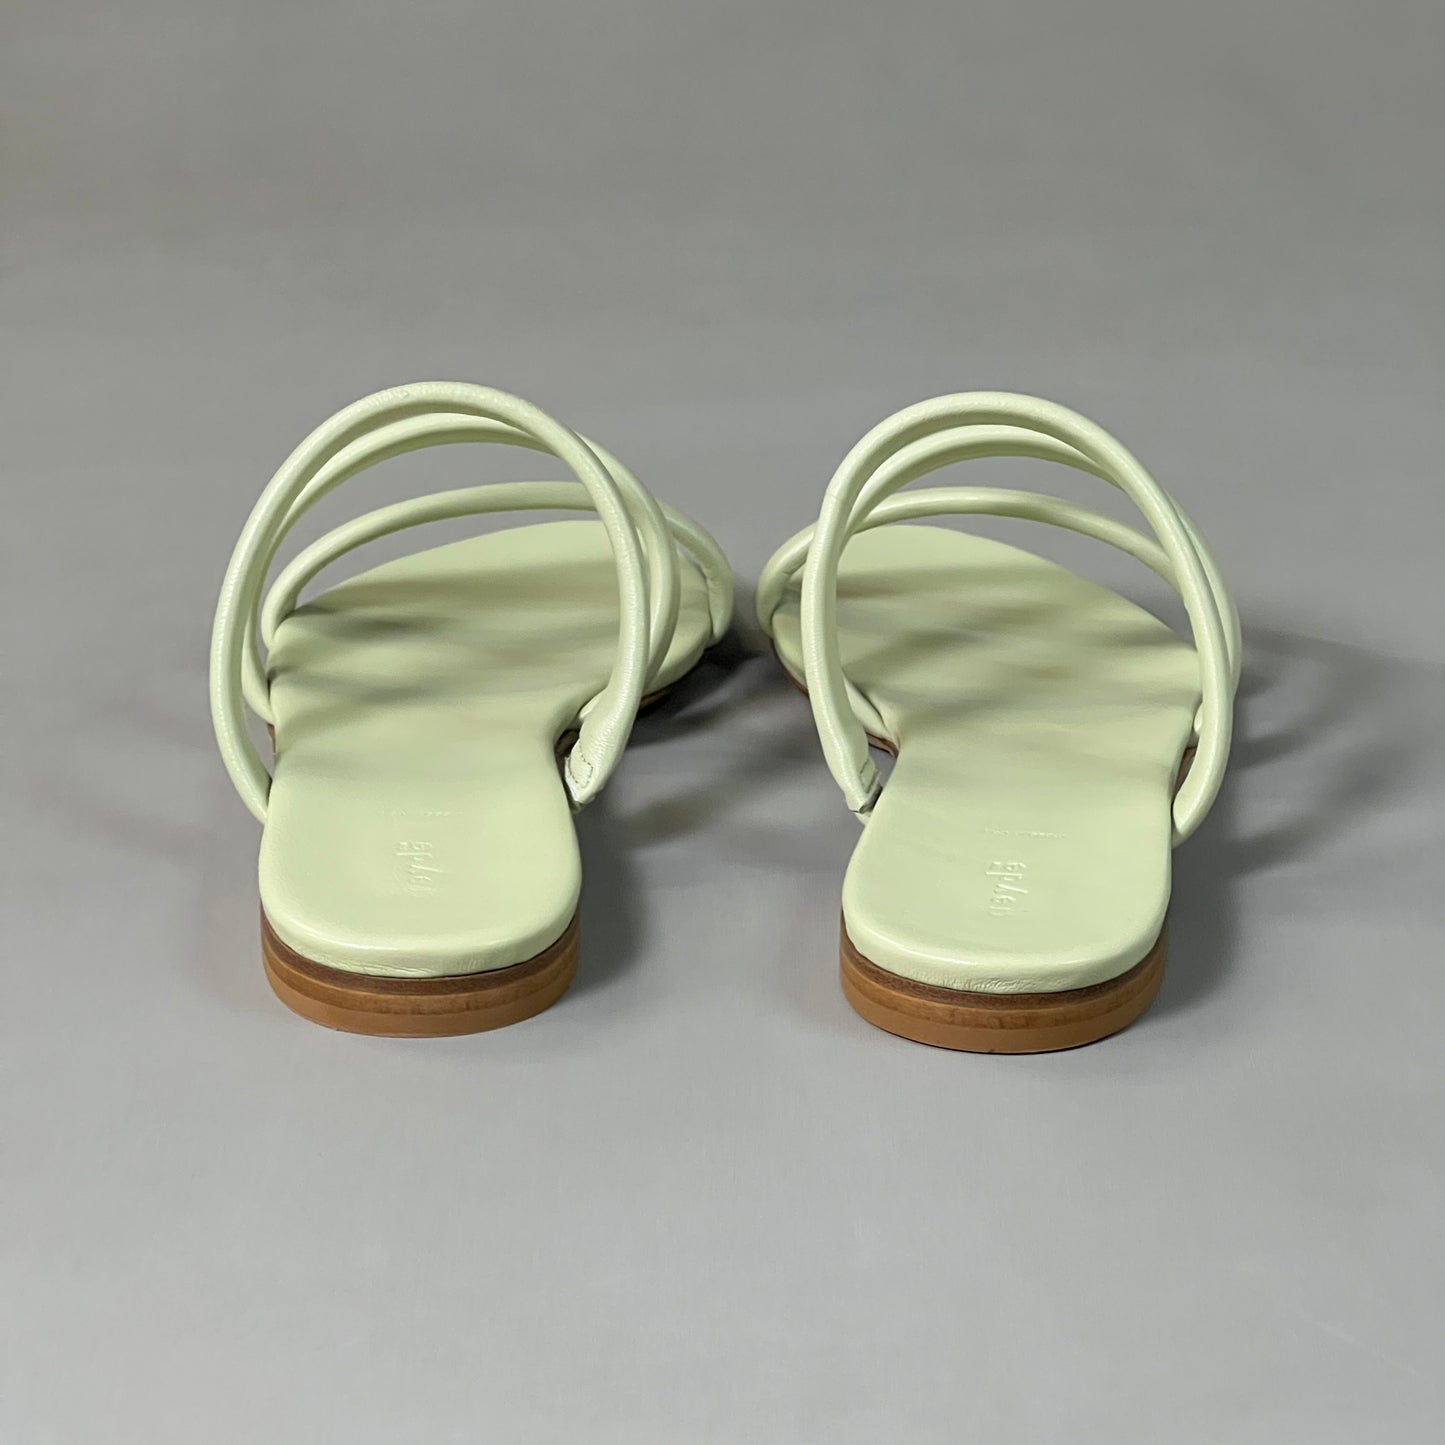 AEYDE Chrissy Pistachio Nappa Leather Sandals Women's Sz 8, EU 38, UK 5 Green (New)